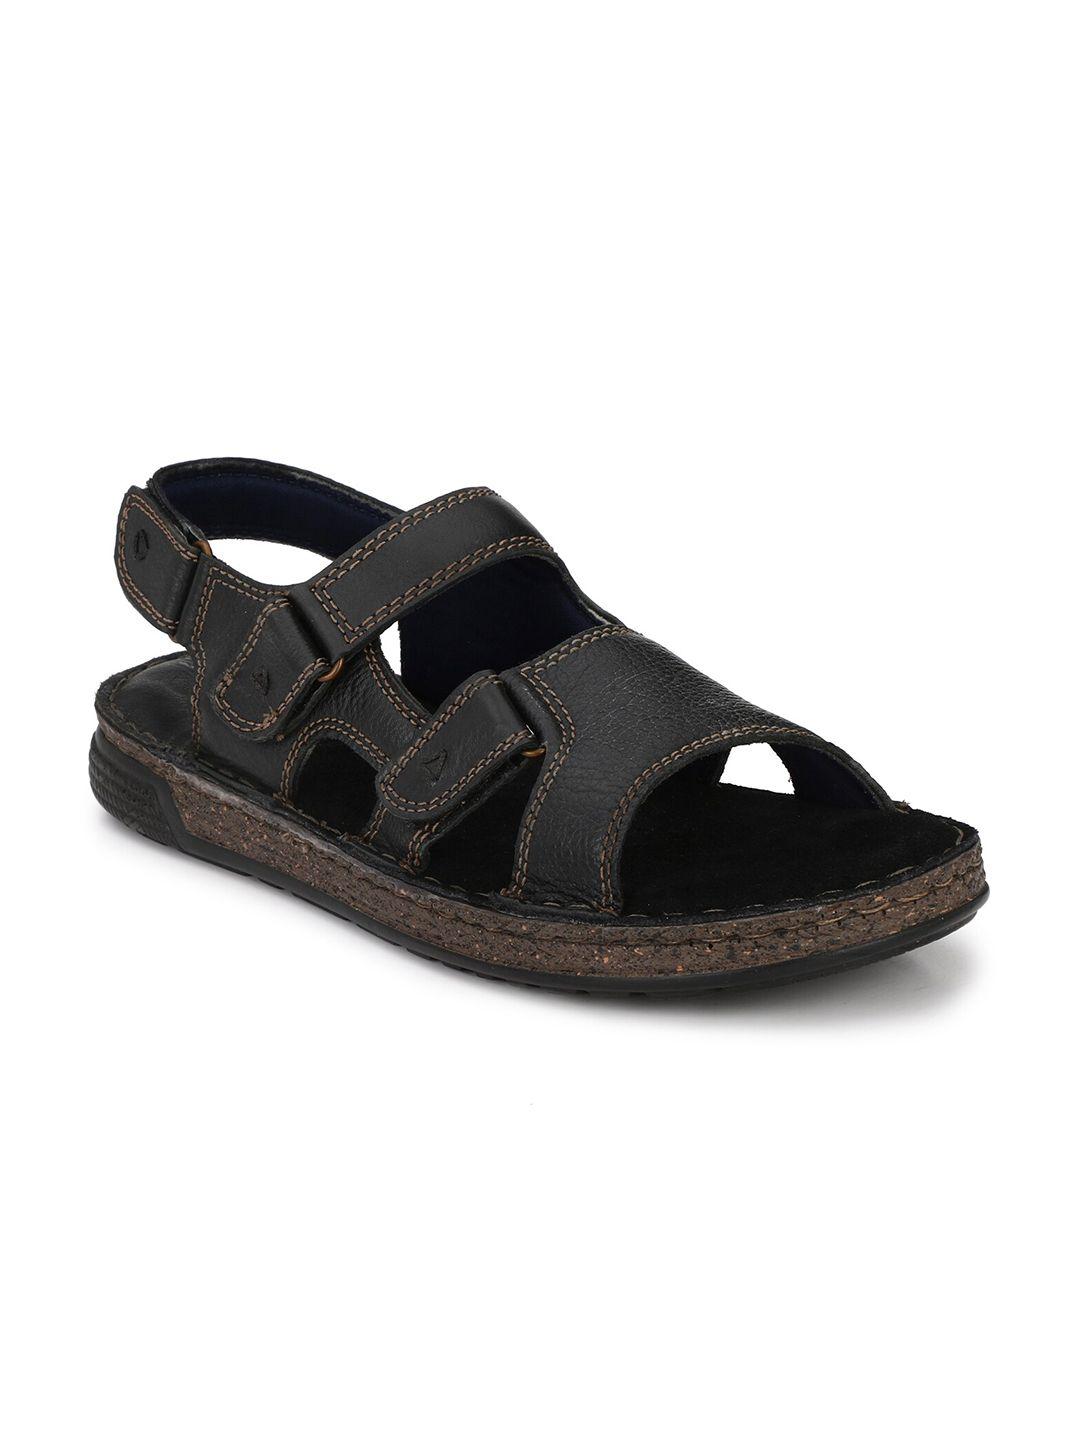 Delize Men Black & Brown Comfort Sandals